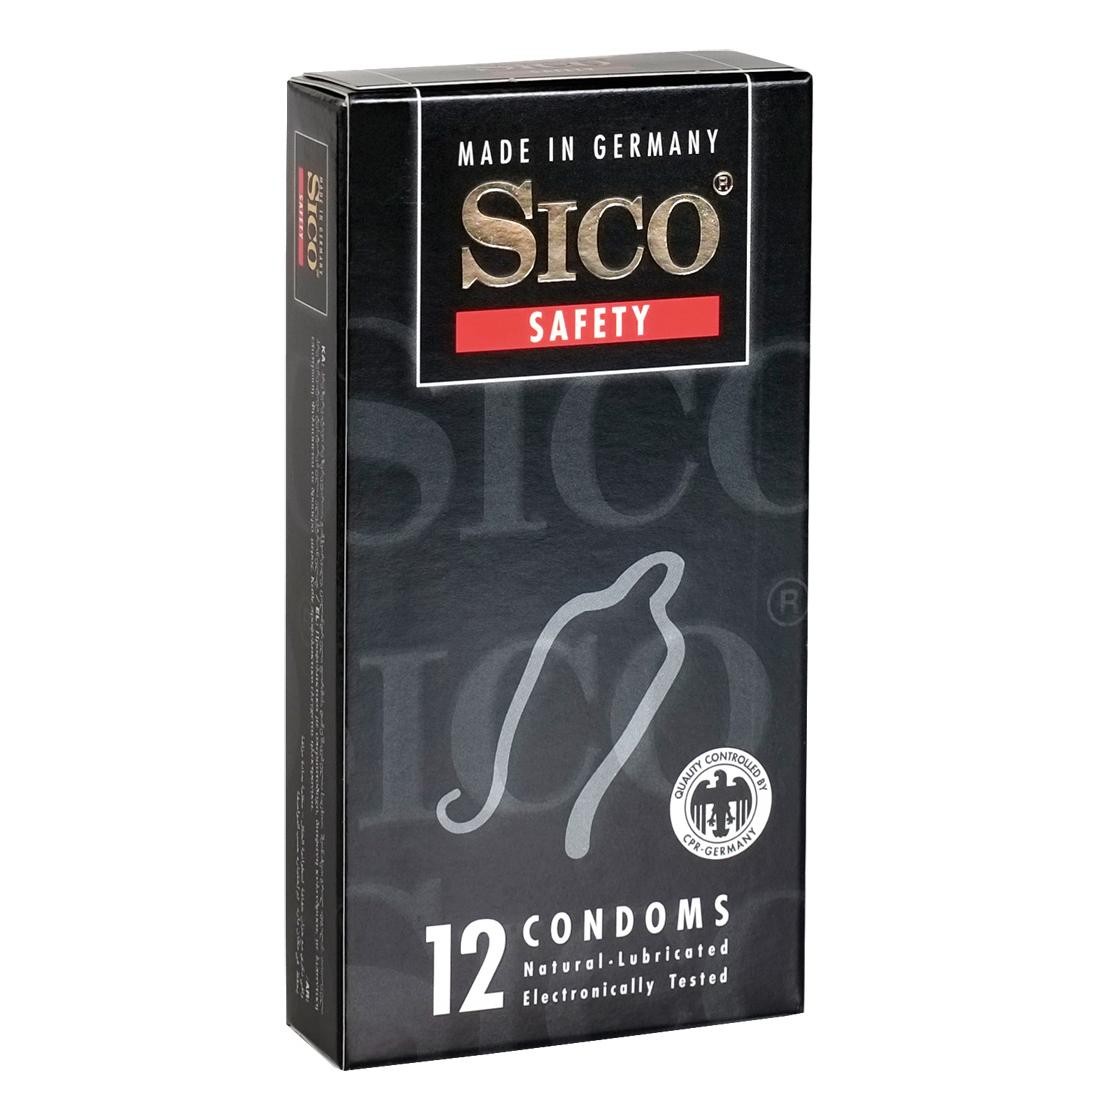  SICO  Safety  12er  -  Kondome 